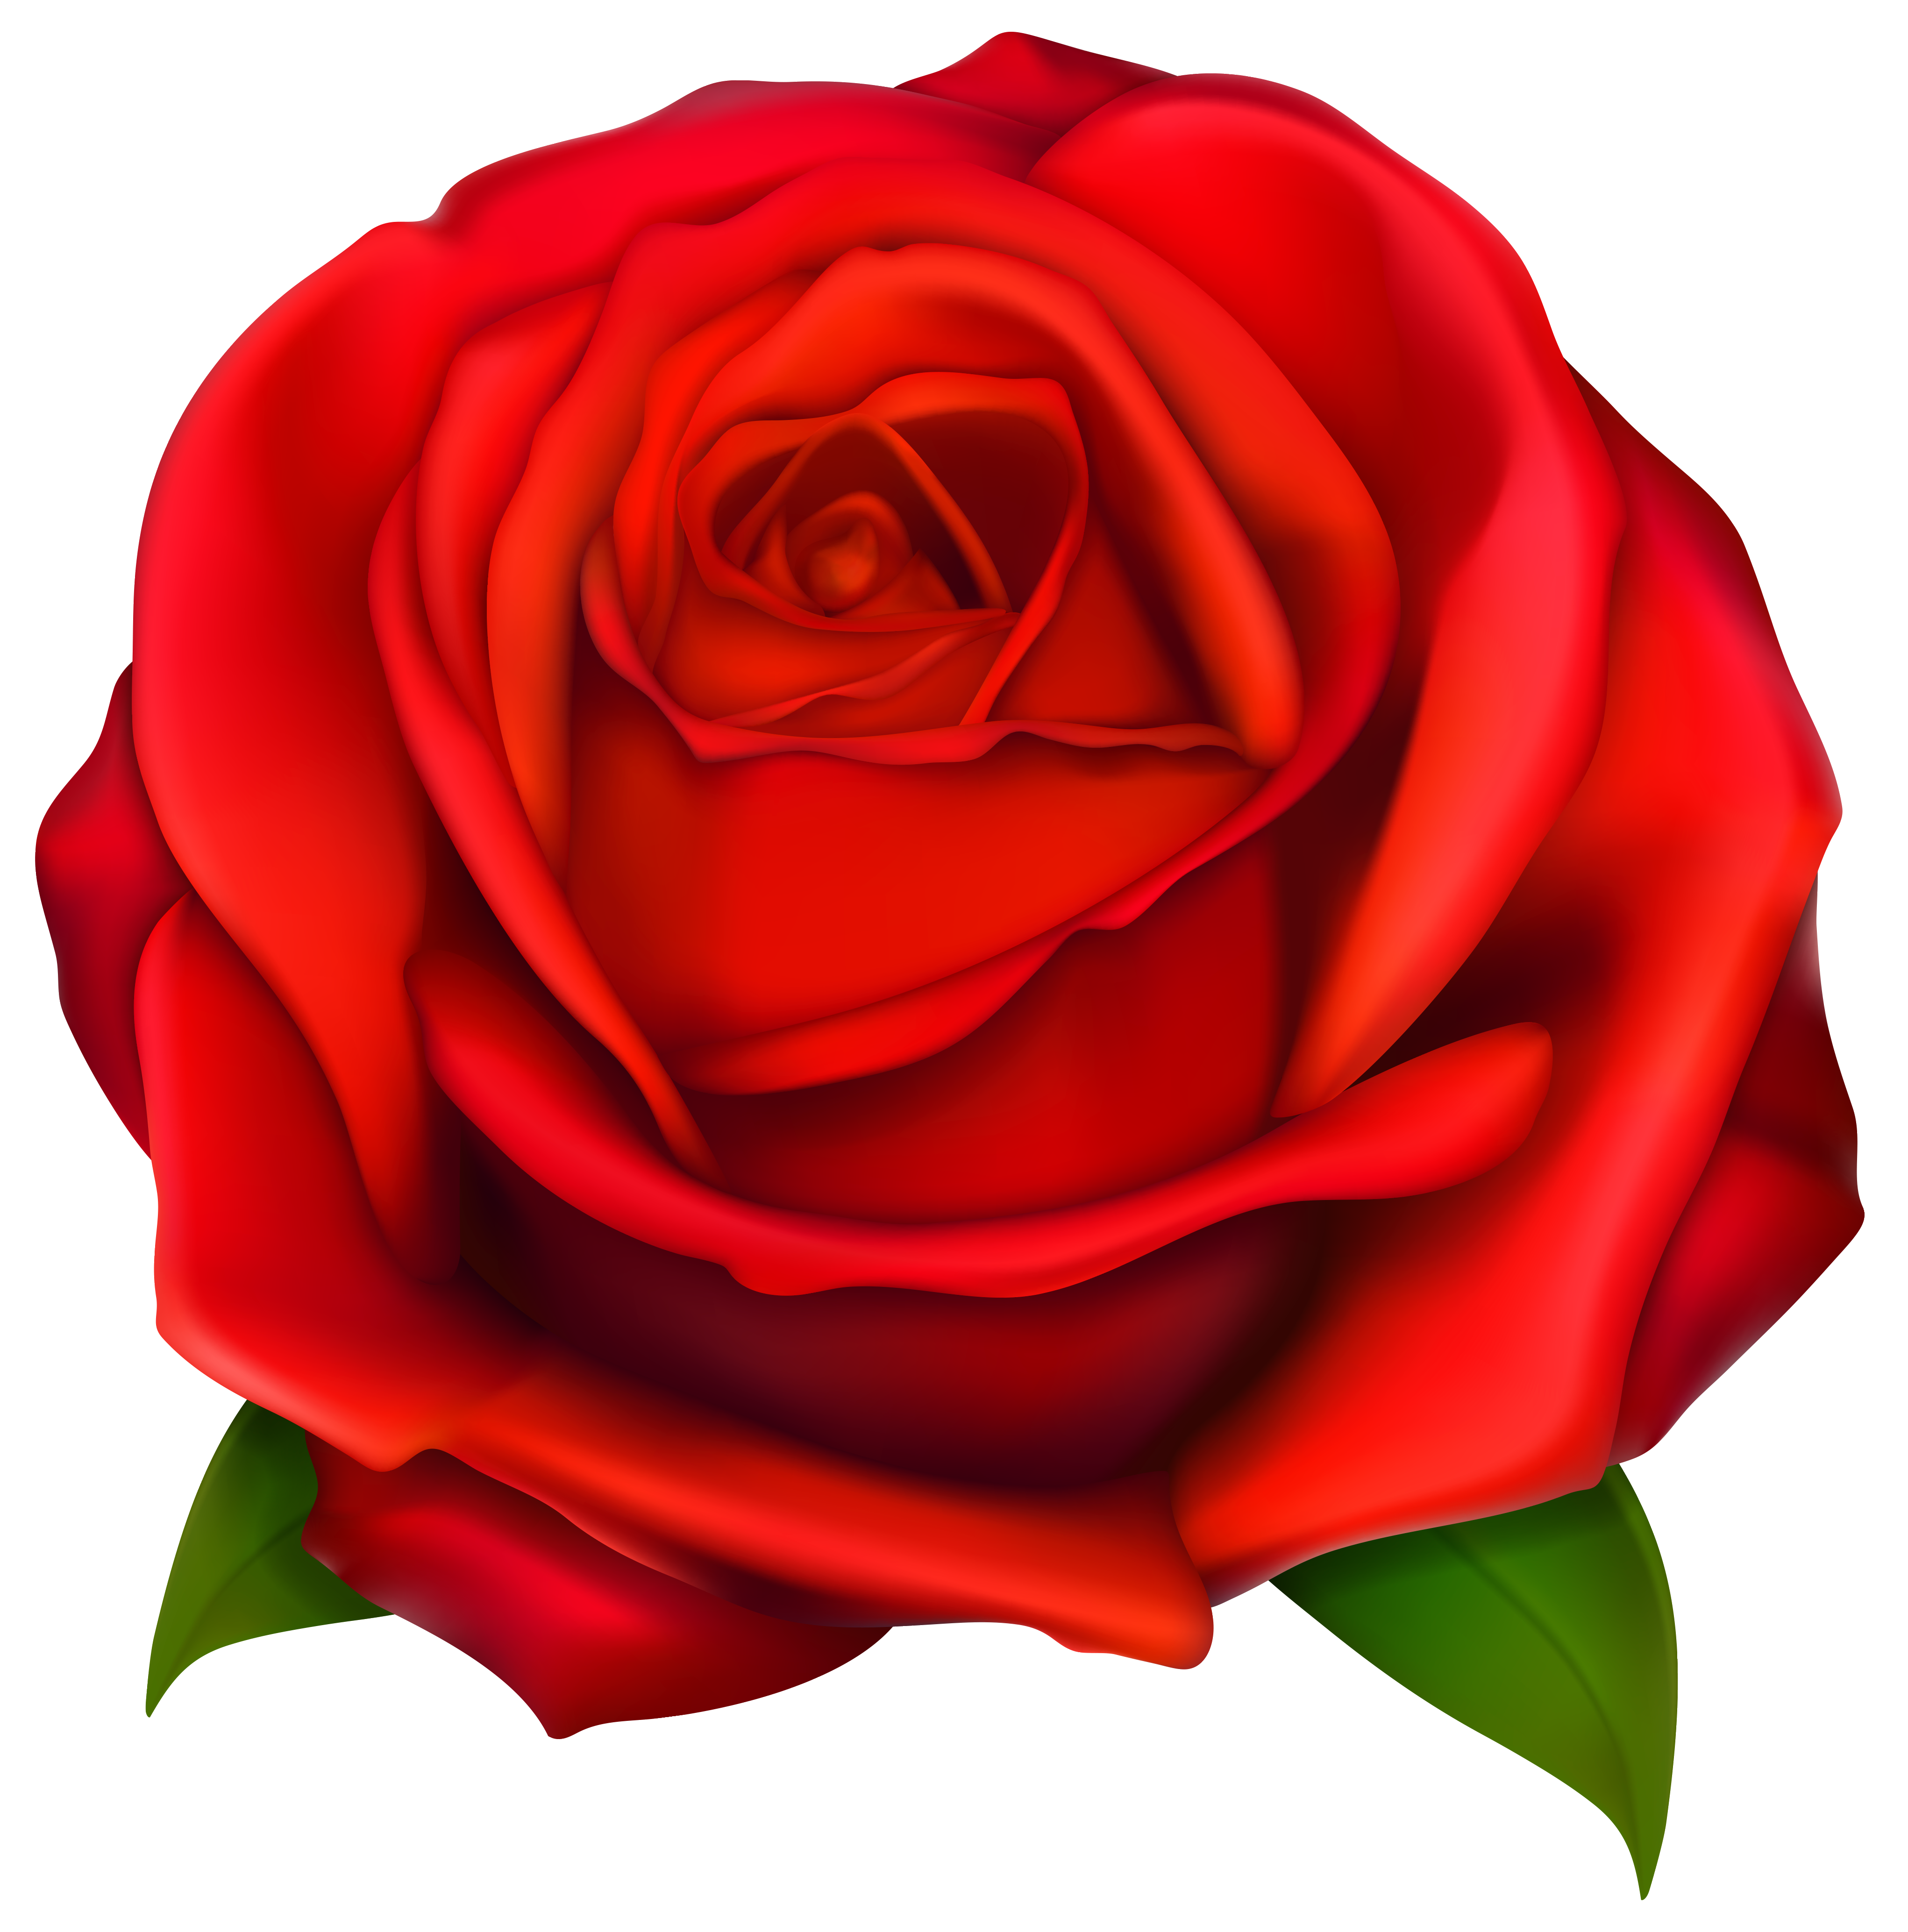 Roses free rose clipart public domain flower clip art images and graphics 4 - Clipartix